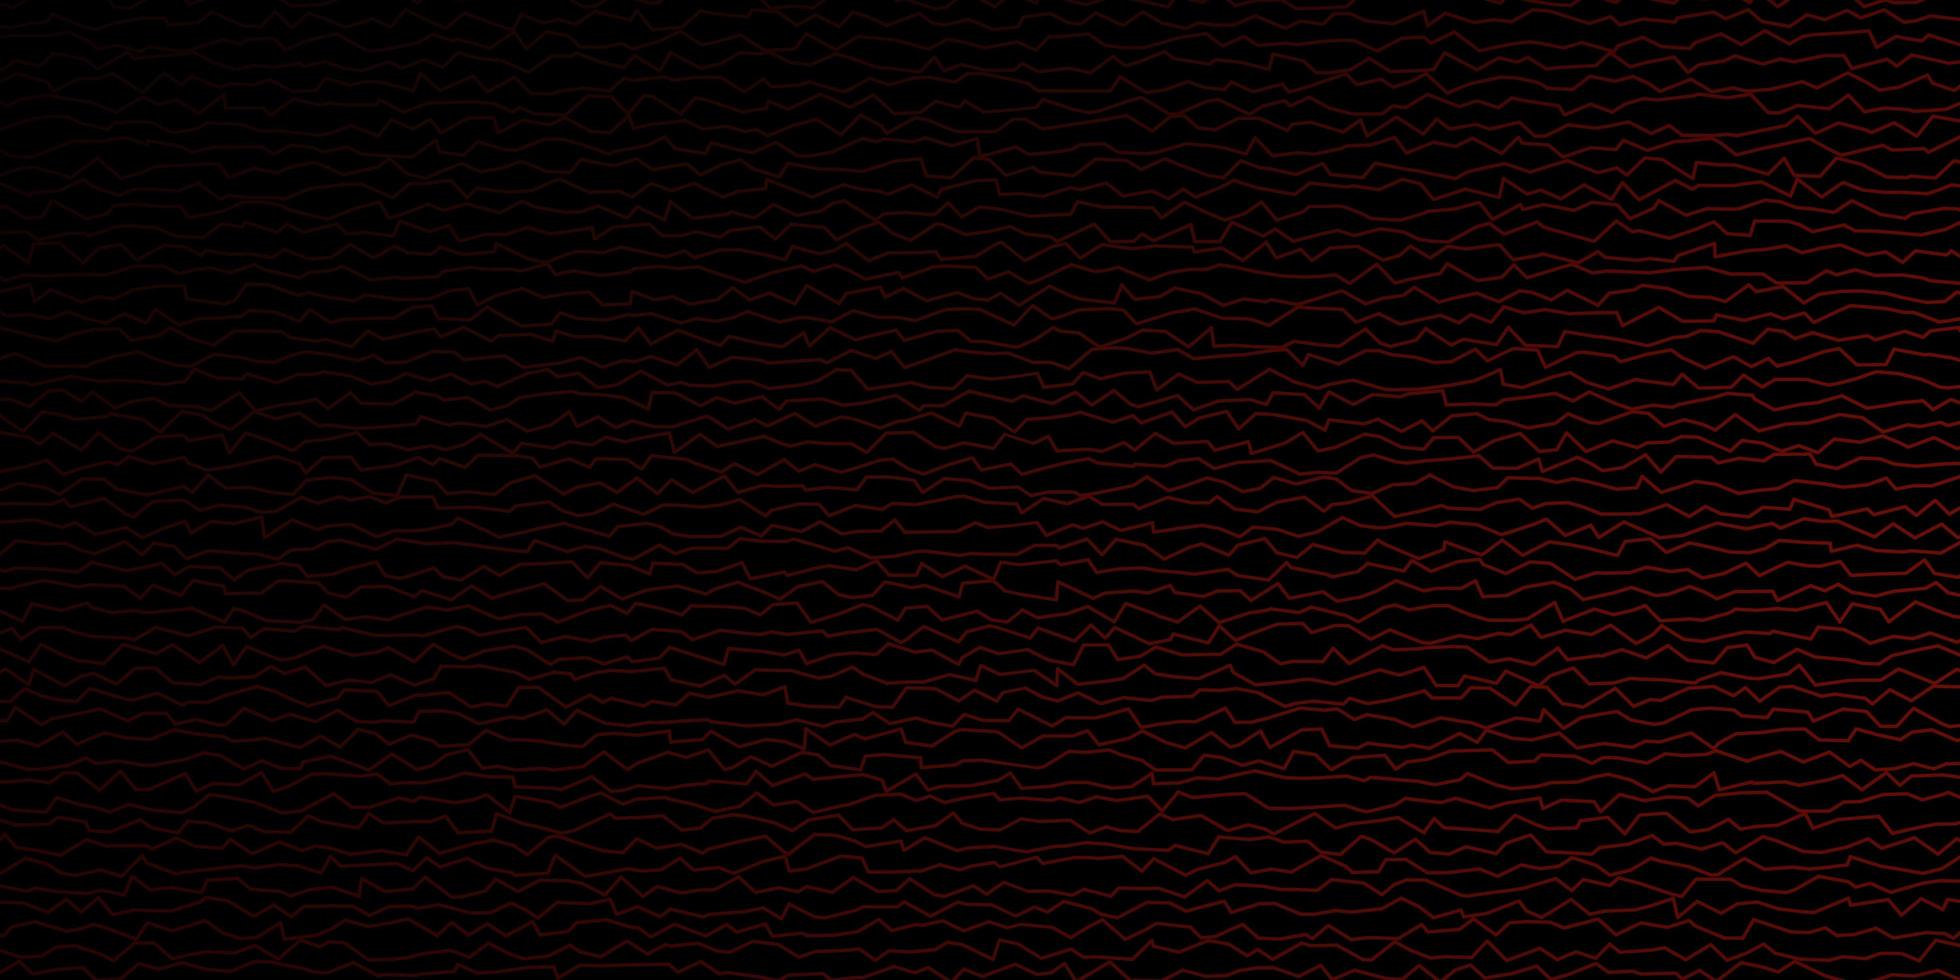 diseño de vector rojo oscuro con líneas torcidas.